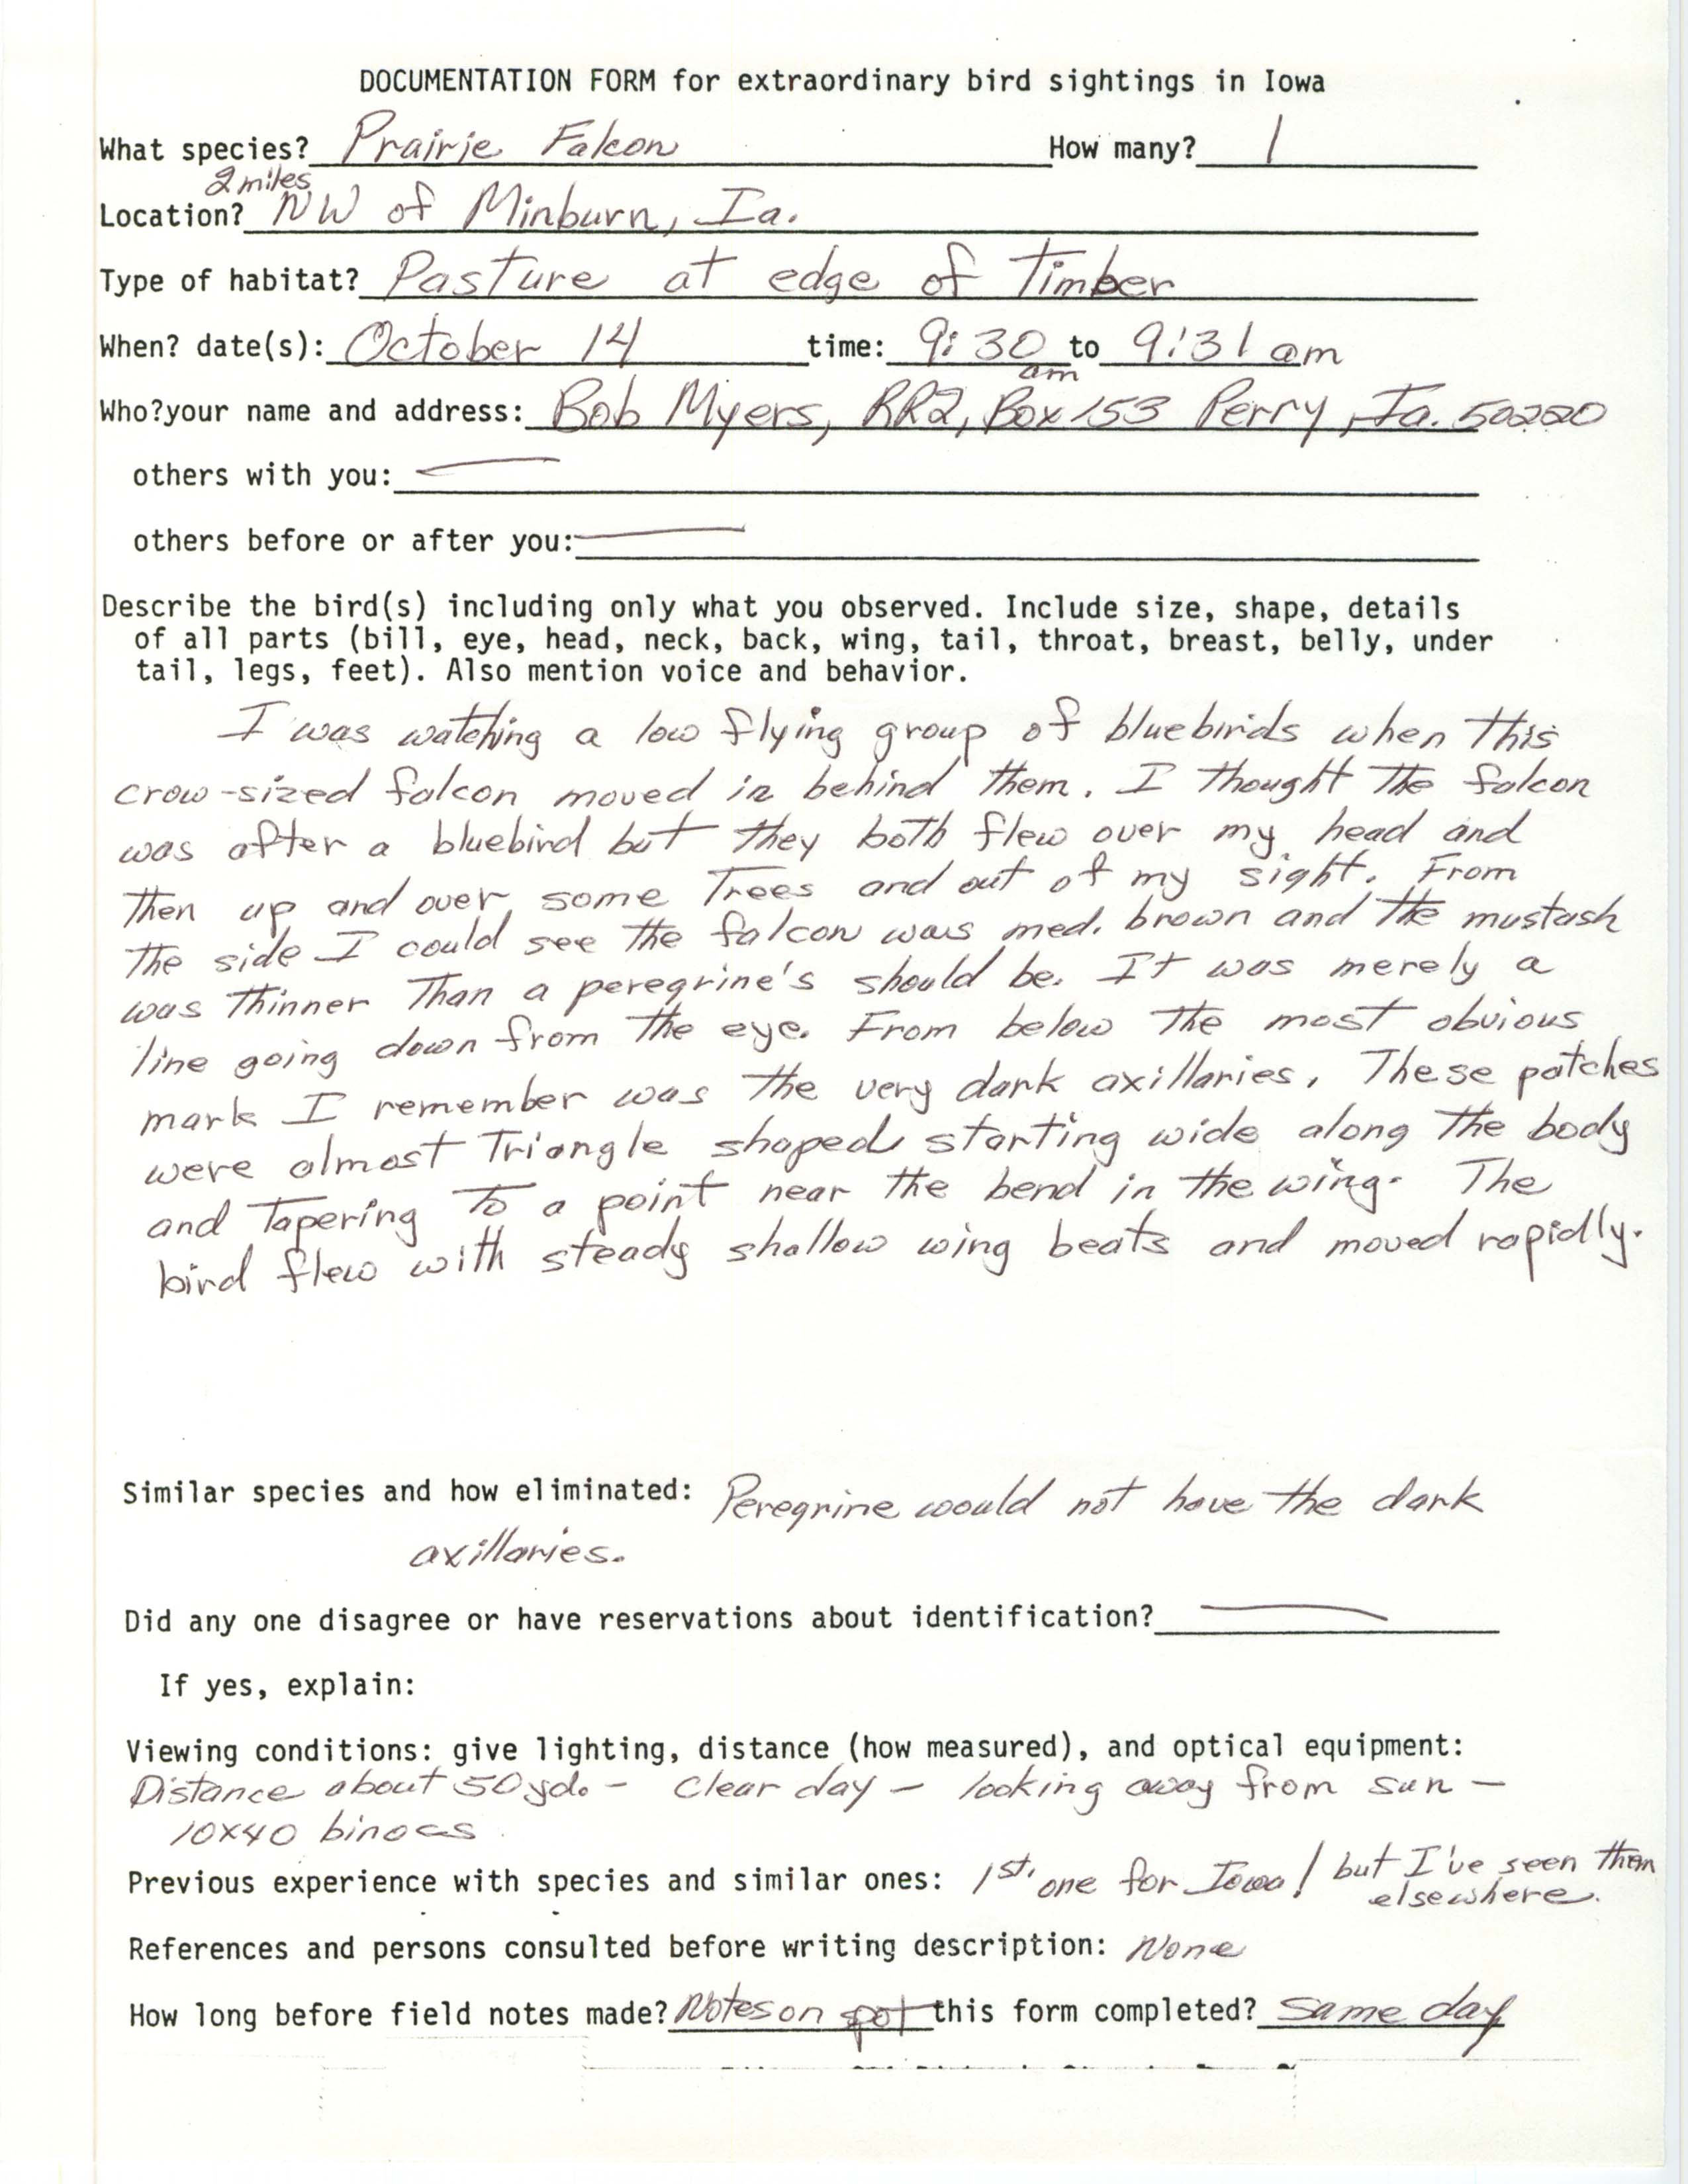 Rare bird documentation form for Prairie Falcon northwest of Minburn, 1989